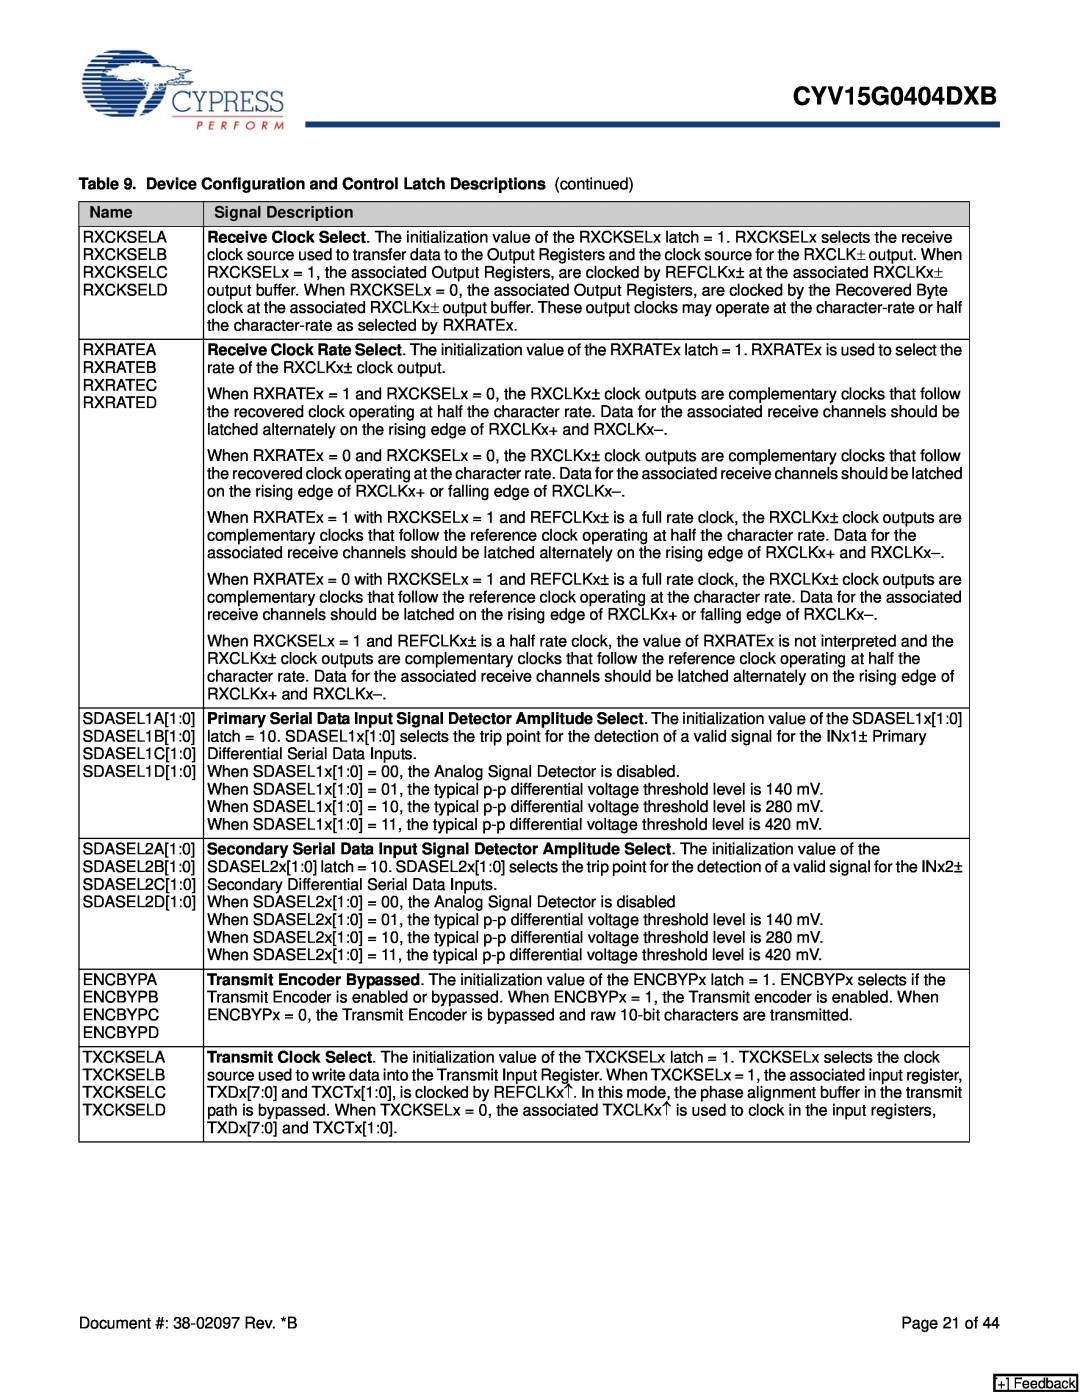 Cypress CYV15G0404DXB manual Page 21 of 